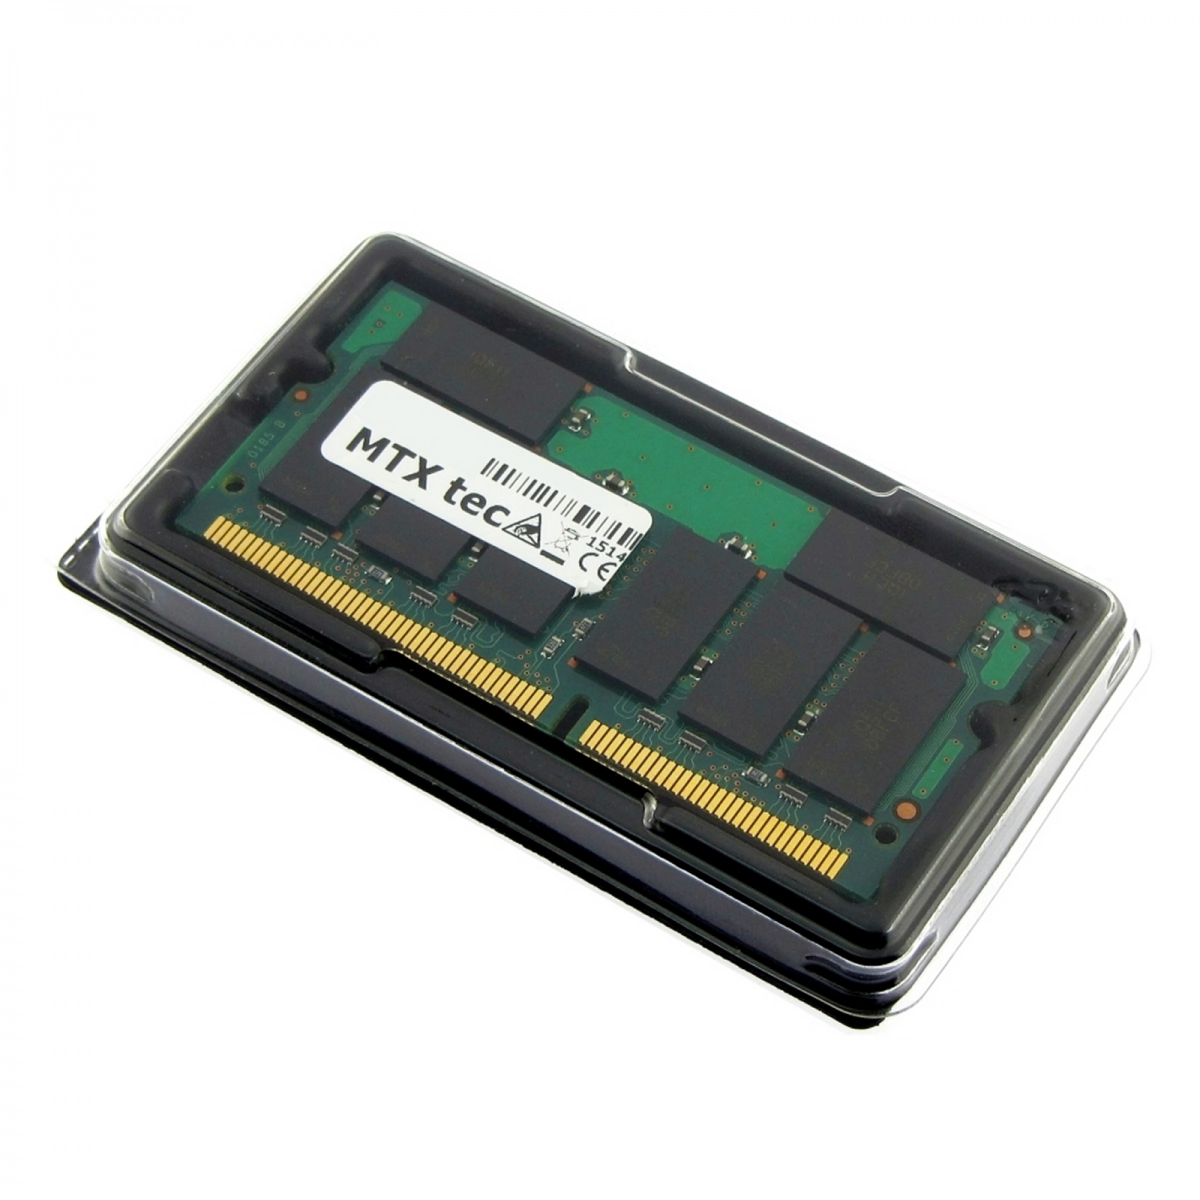 MTXtec Arbeitsspeicher 512 MB RAM für LENOVO ThinkPad R31 (2657)